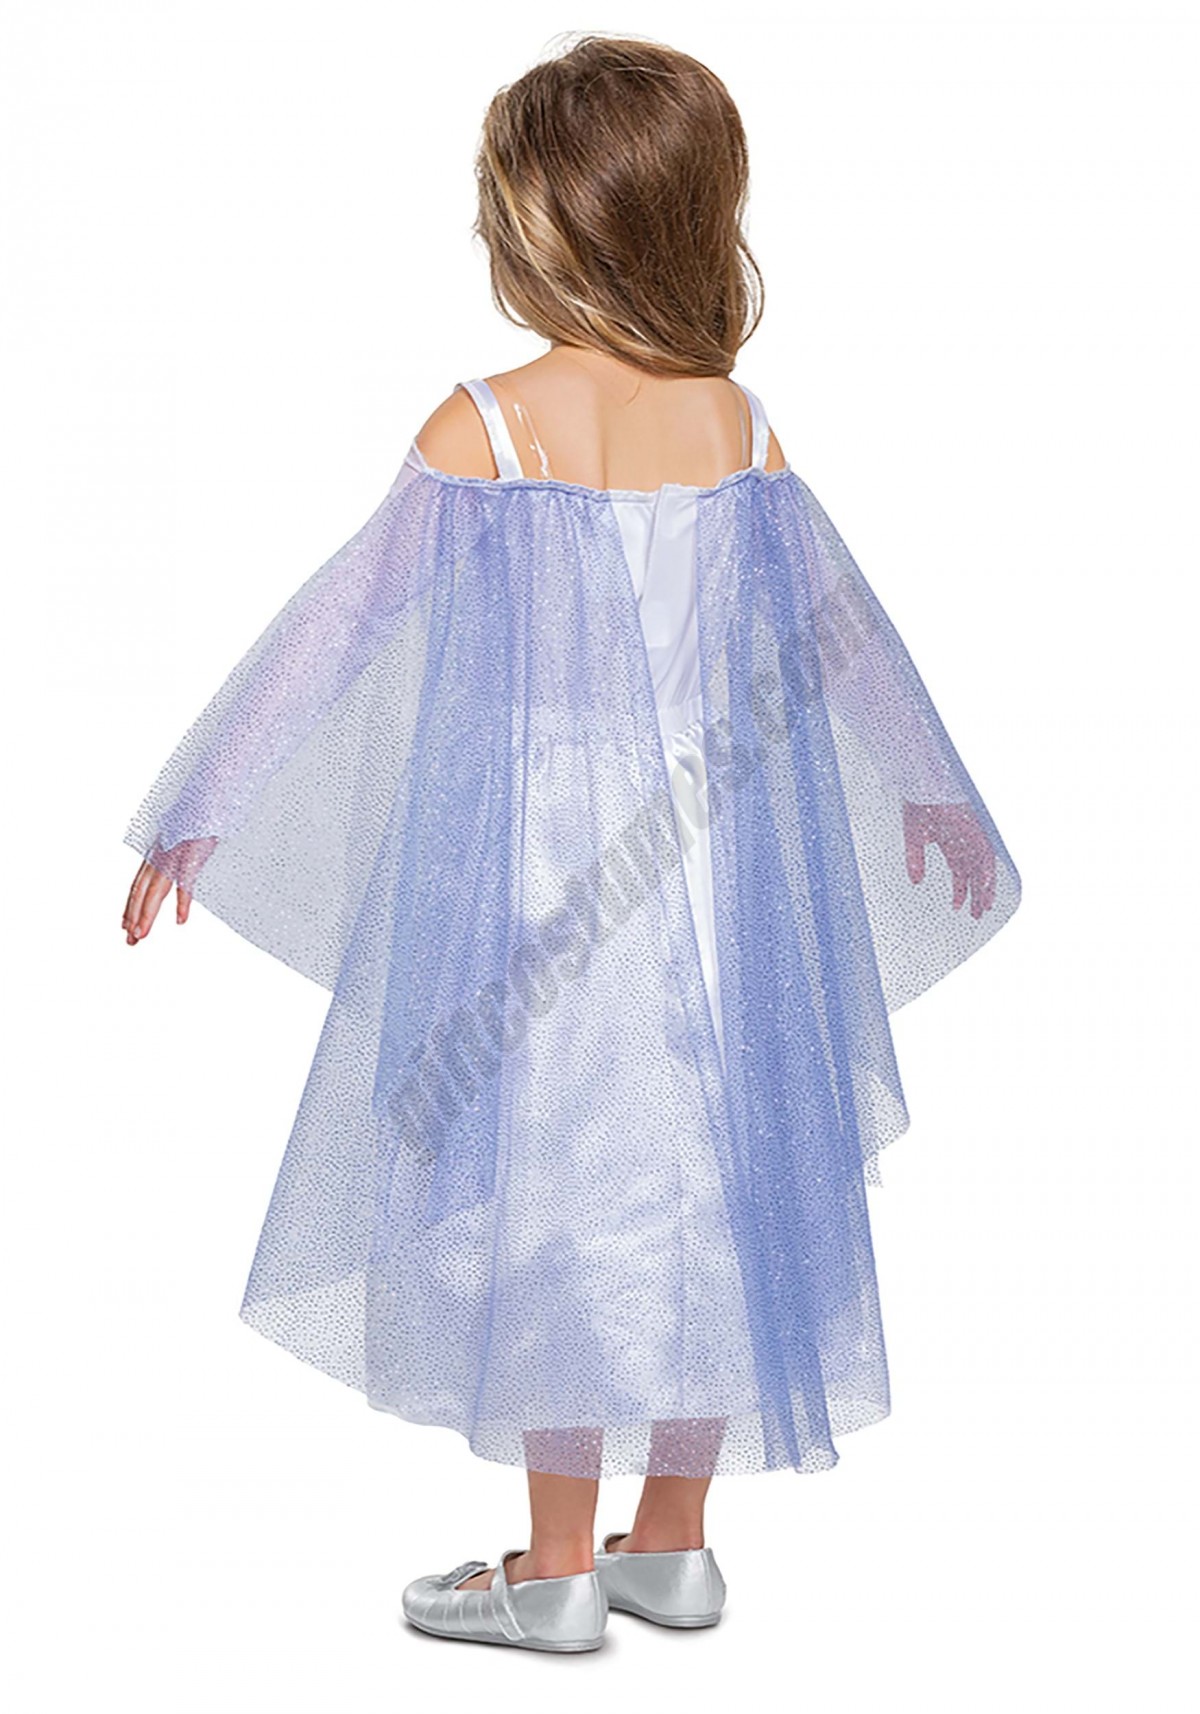 Frozen Snow Queen Elsa Classic Costume for Kids Promotions - -1